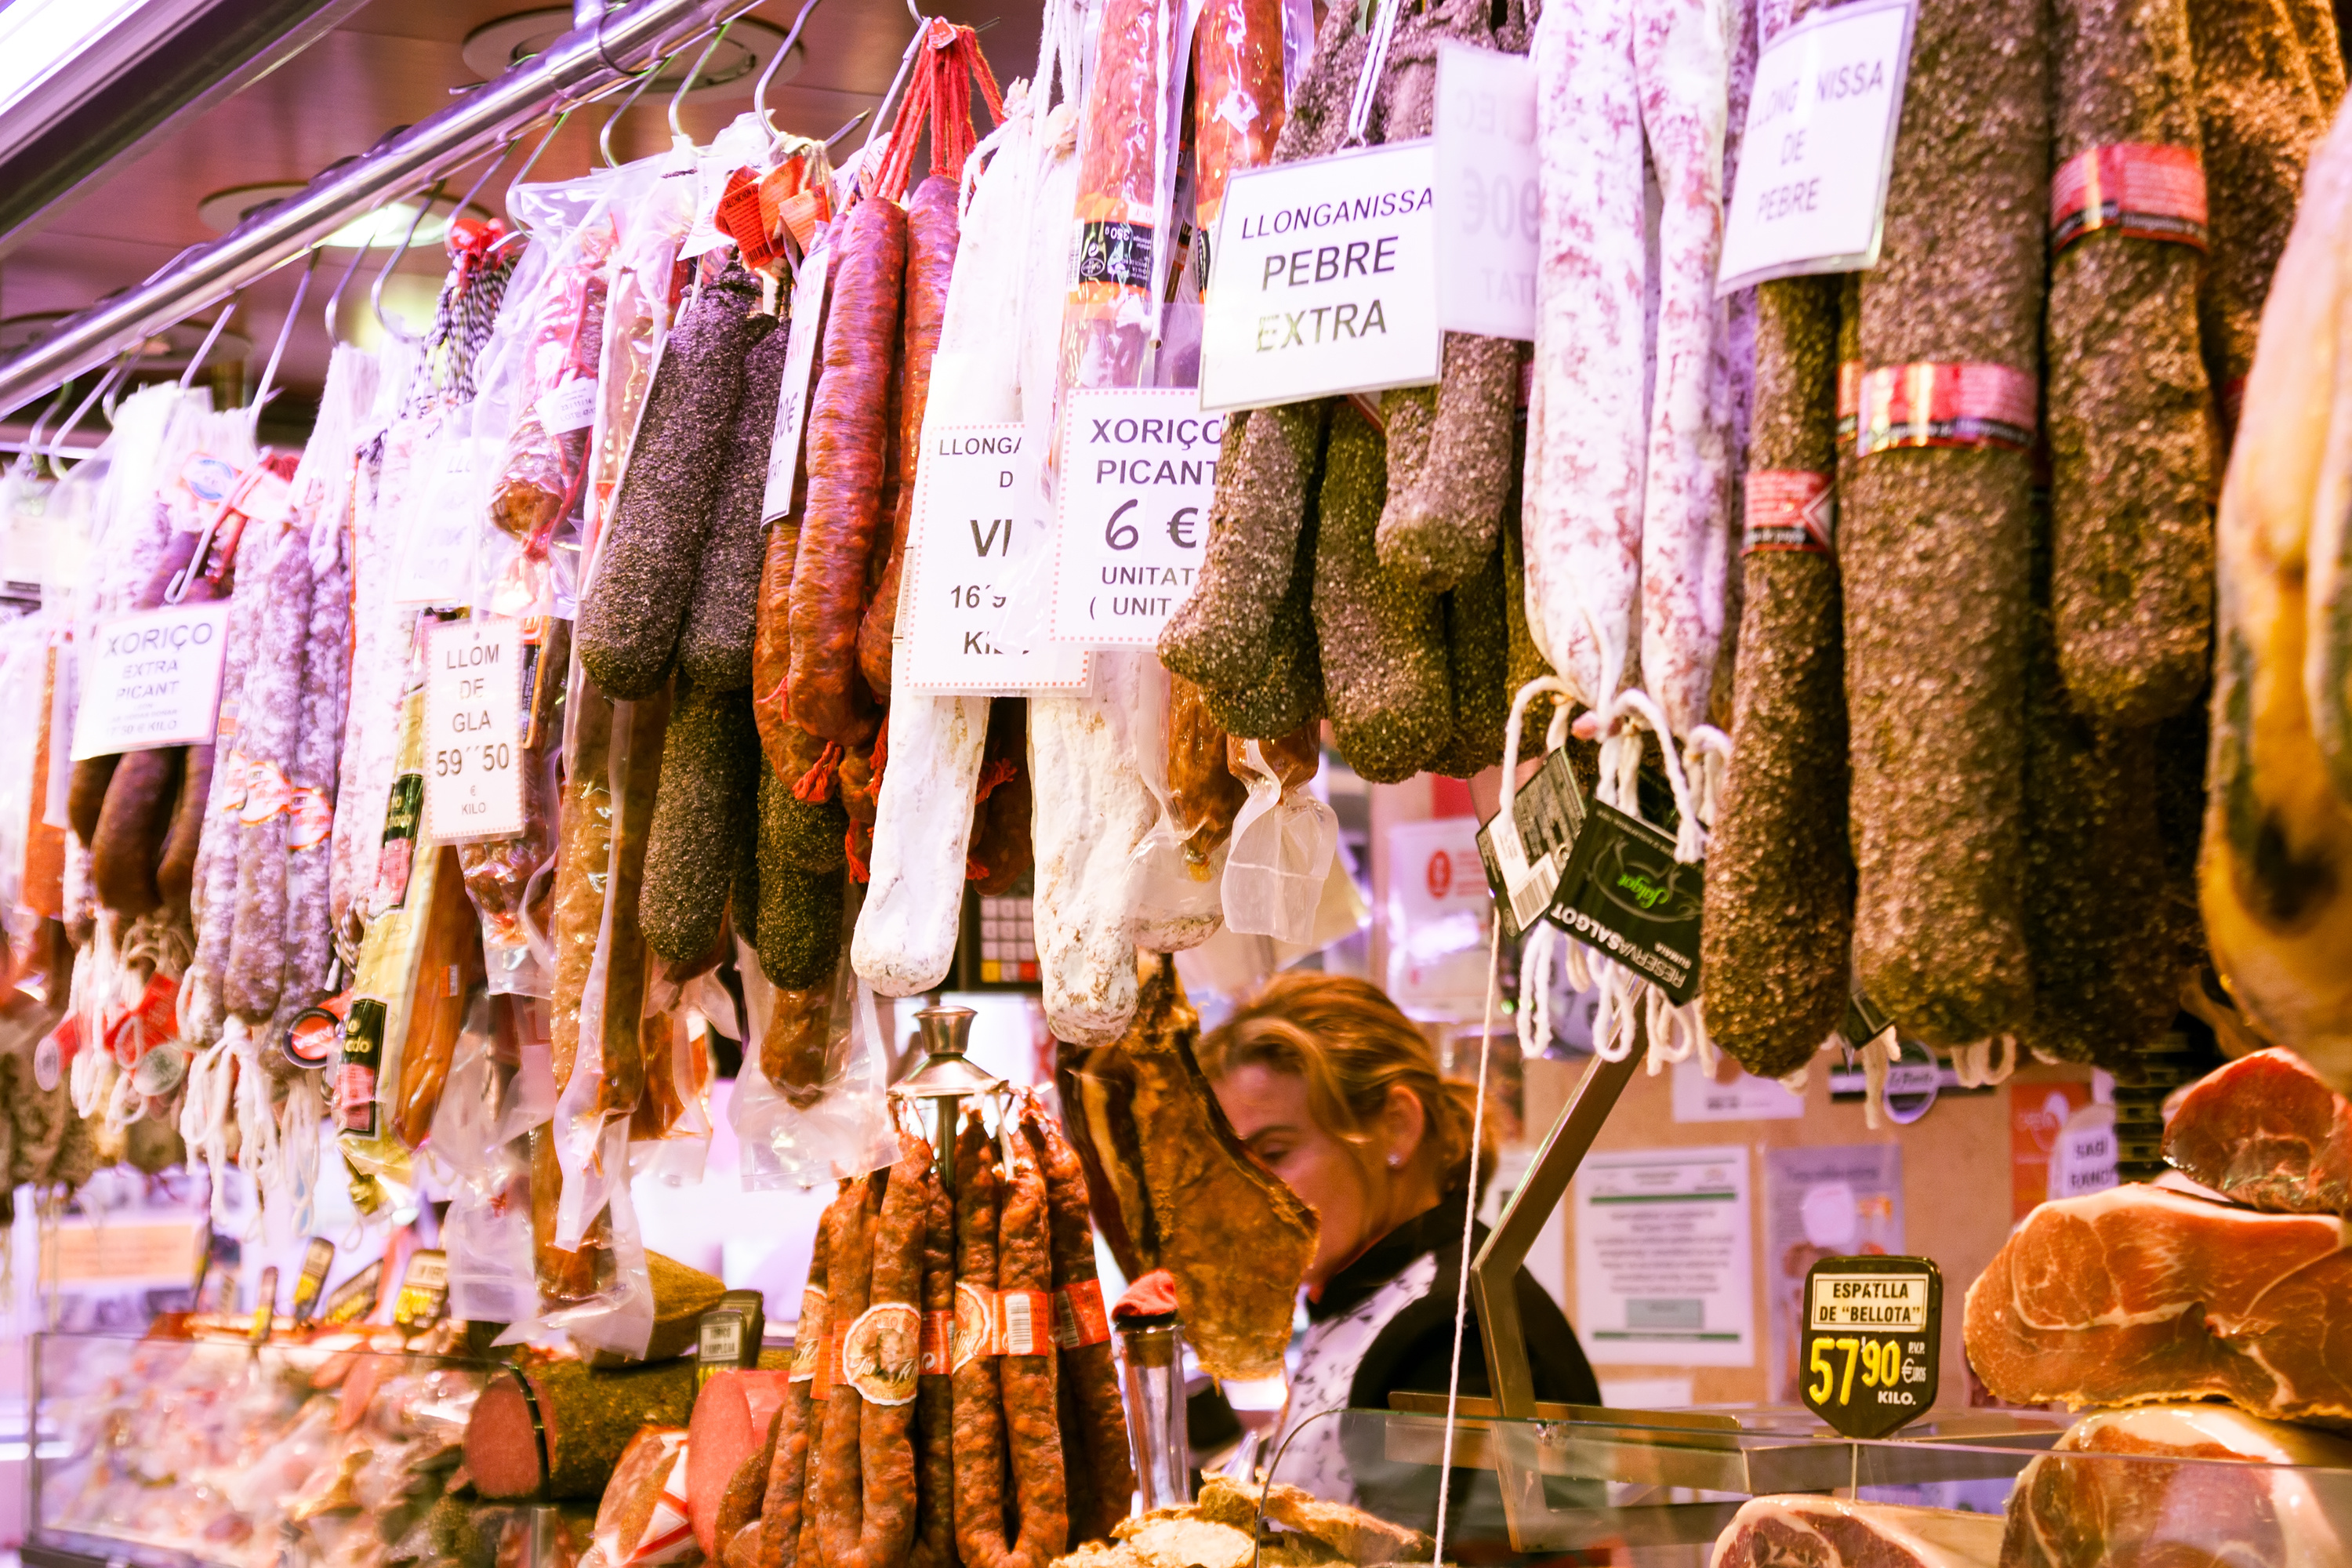 Market stall selling sausage